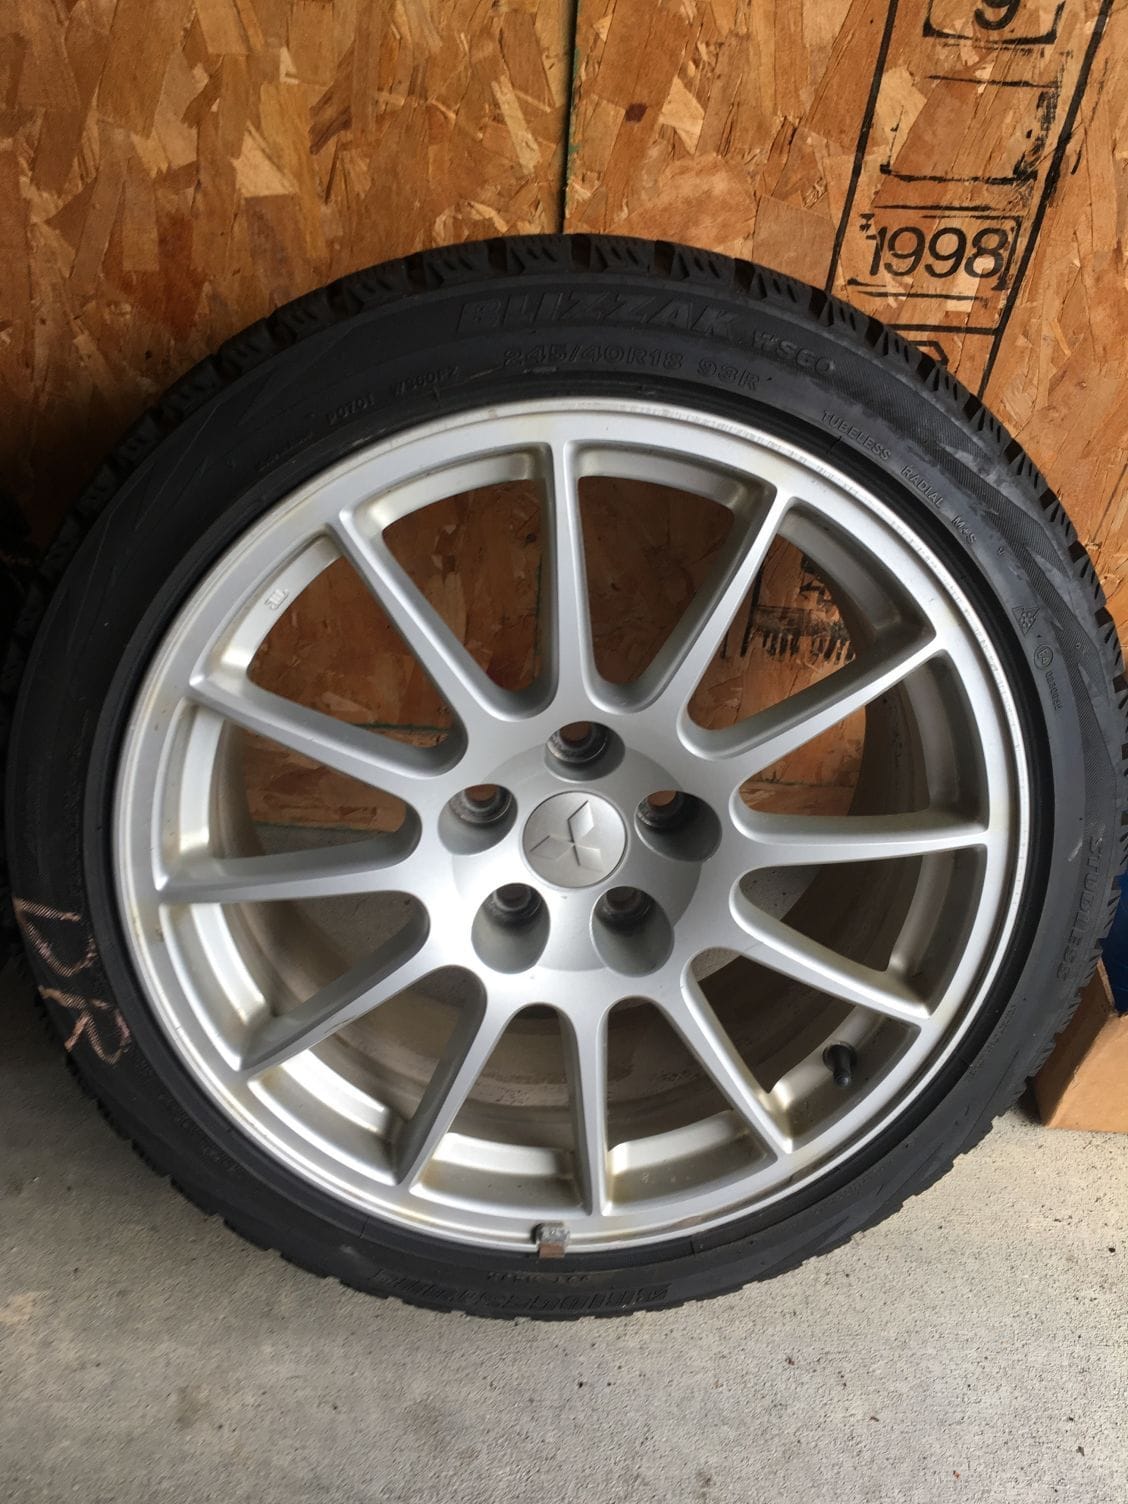 Wheels and Tires/Axles - EVO X GSR Rims W/ Blizzak W60 Winter Tires - Used - 2008 to 2015 Mitsubishi Lancer Evolution - Pittsburgh, PA 15201, United States